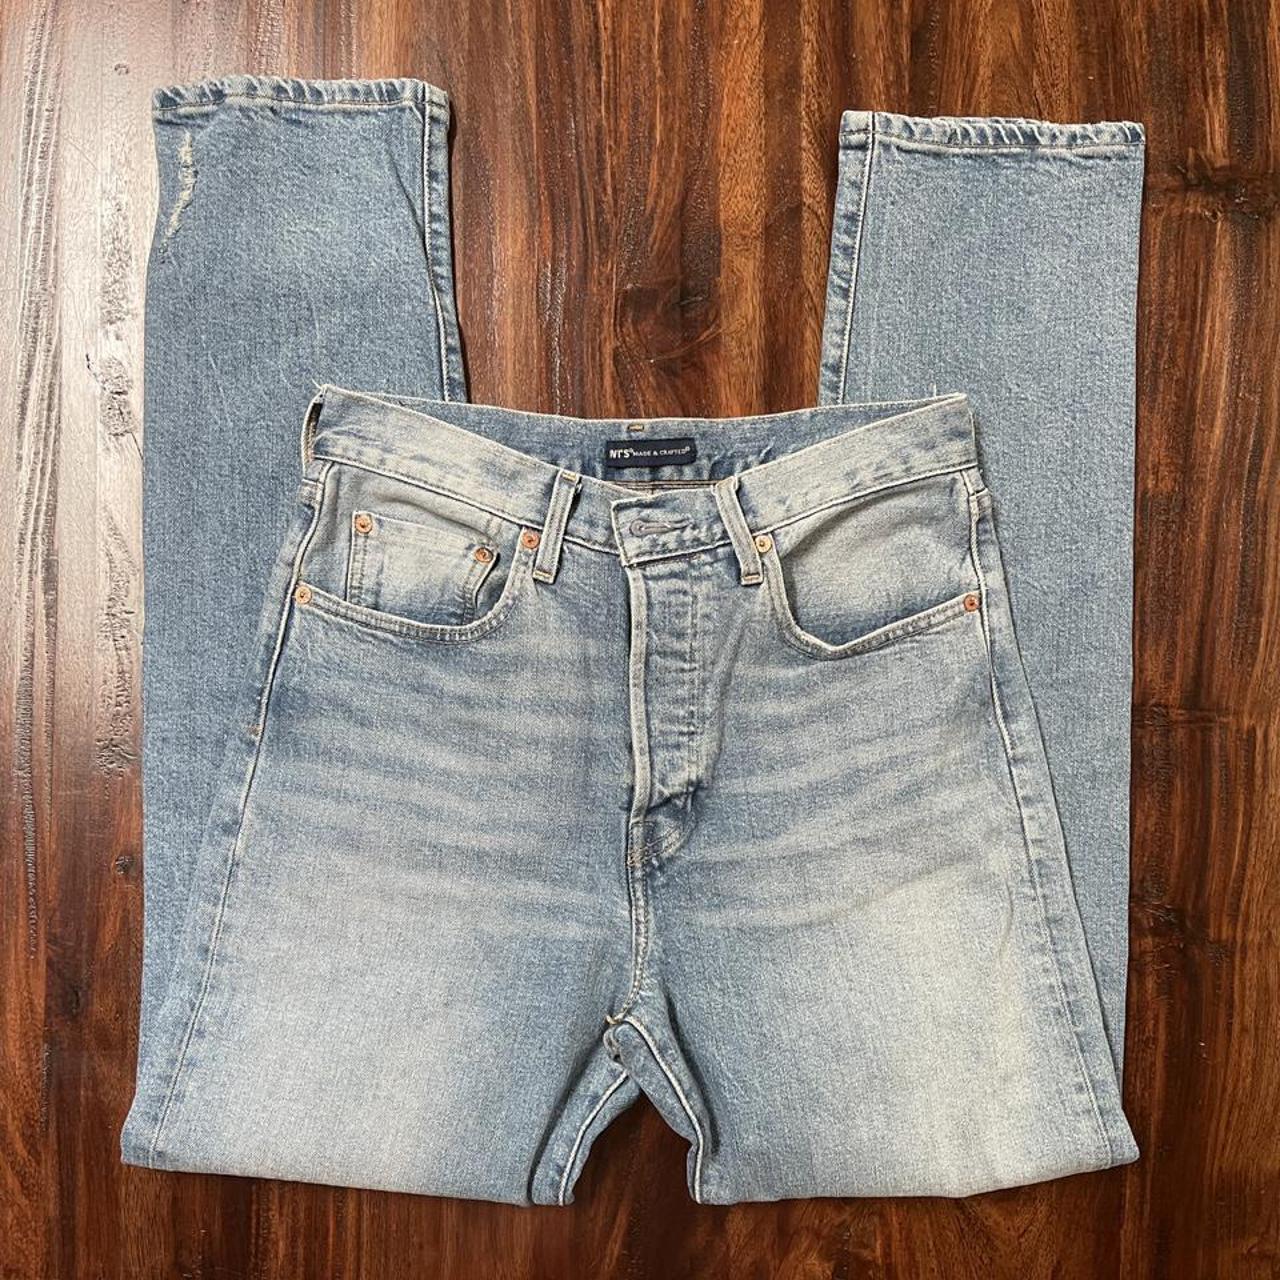 levi's 501 original selvedge jeans